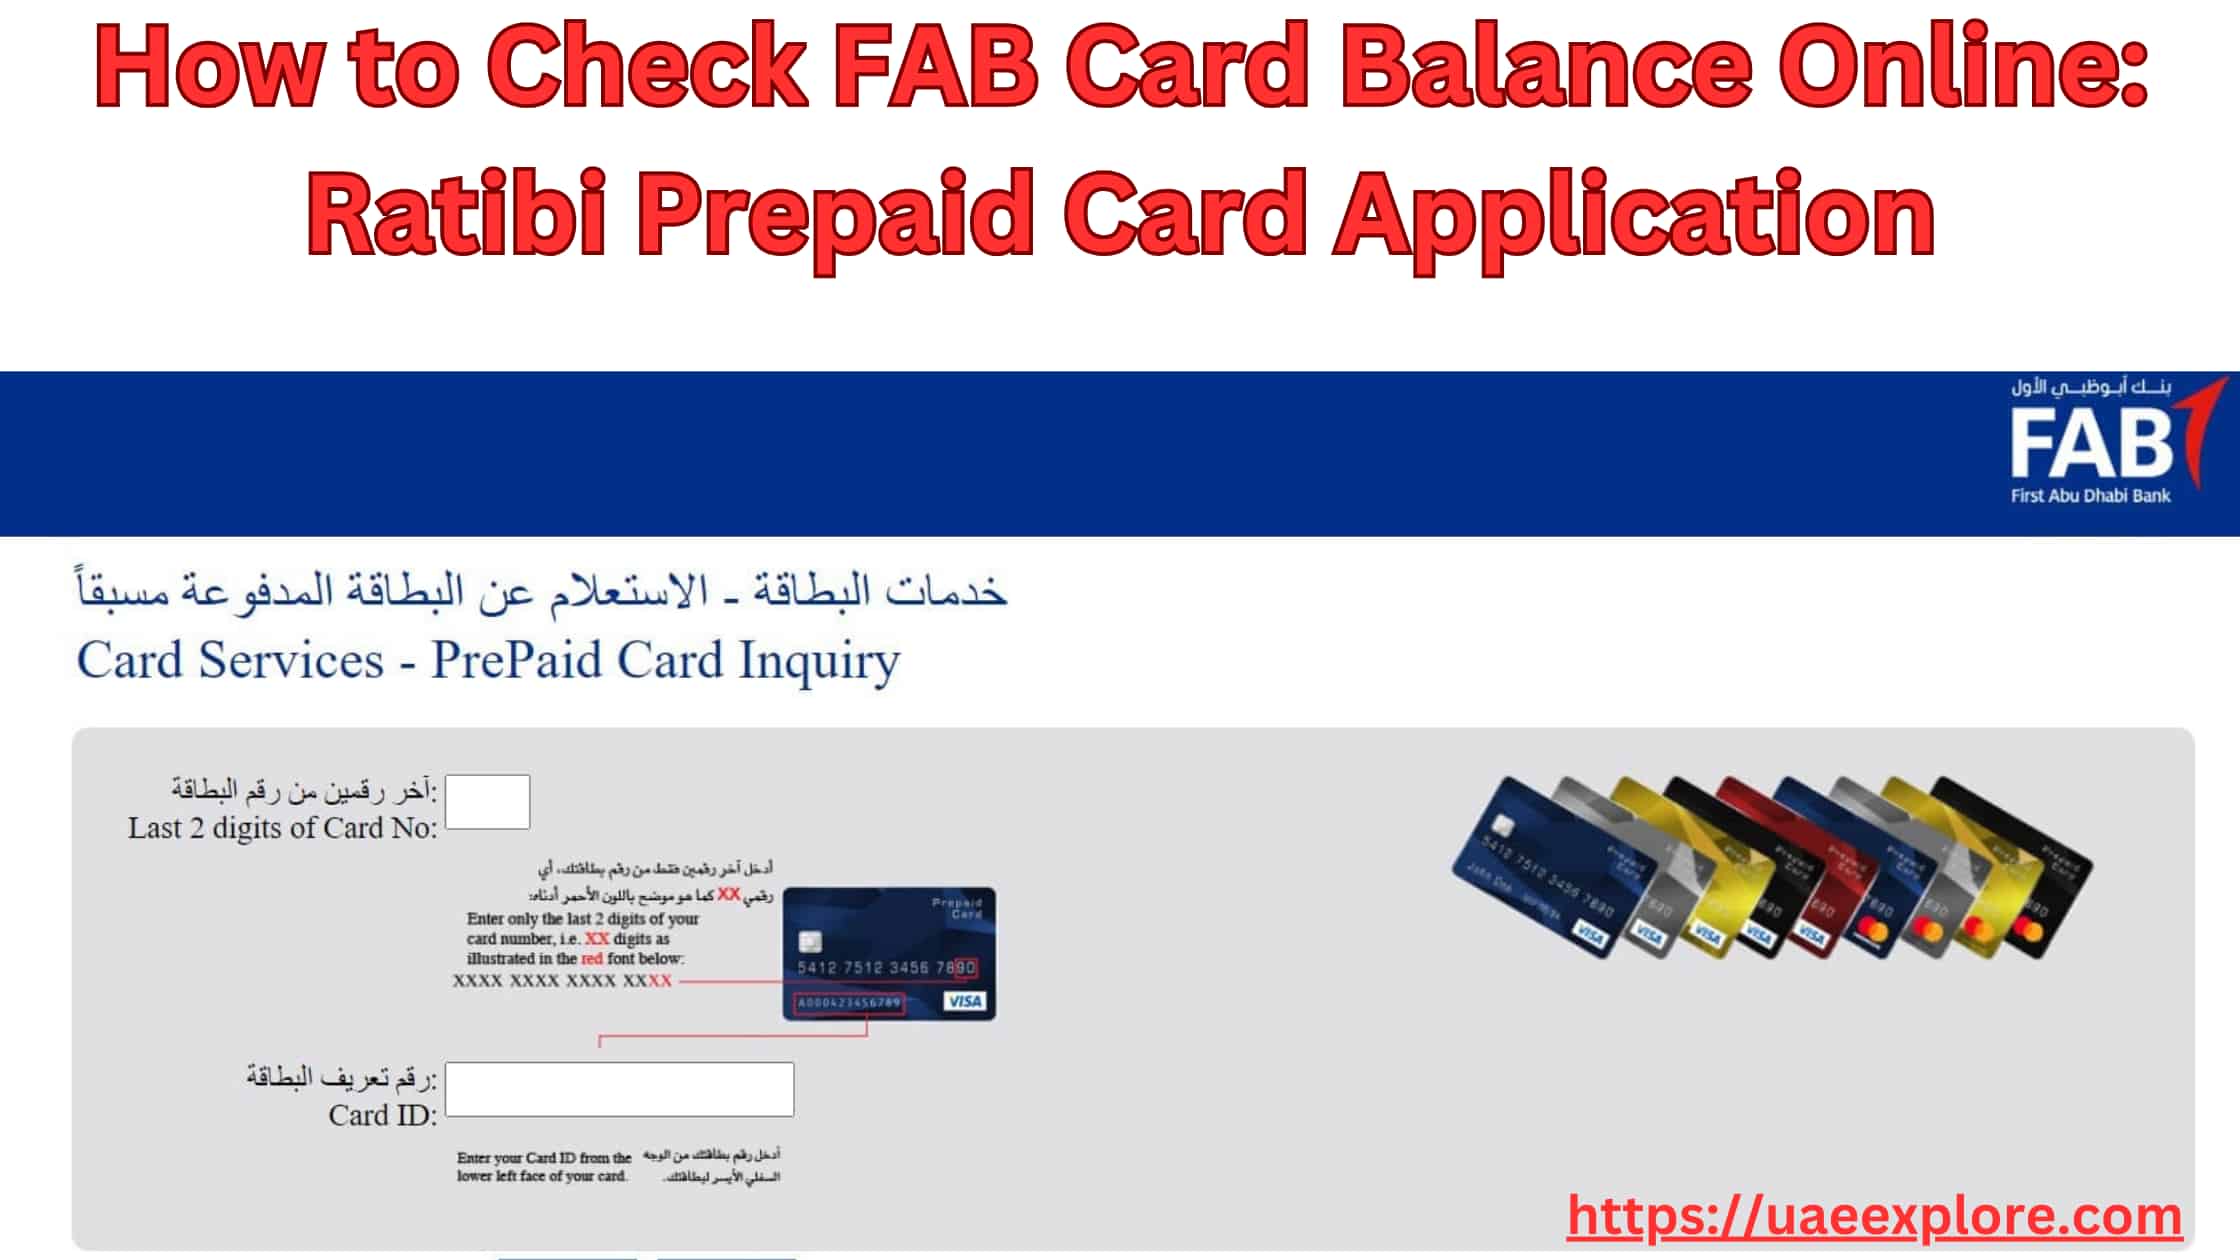 How to Check FAB Card Balance Online: Ratibi Prepaid Card Application